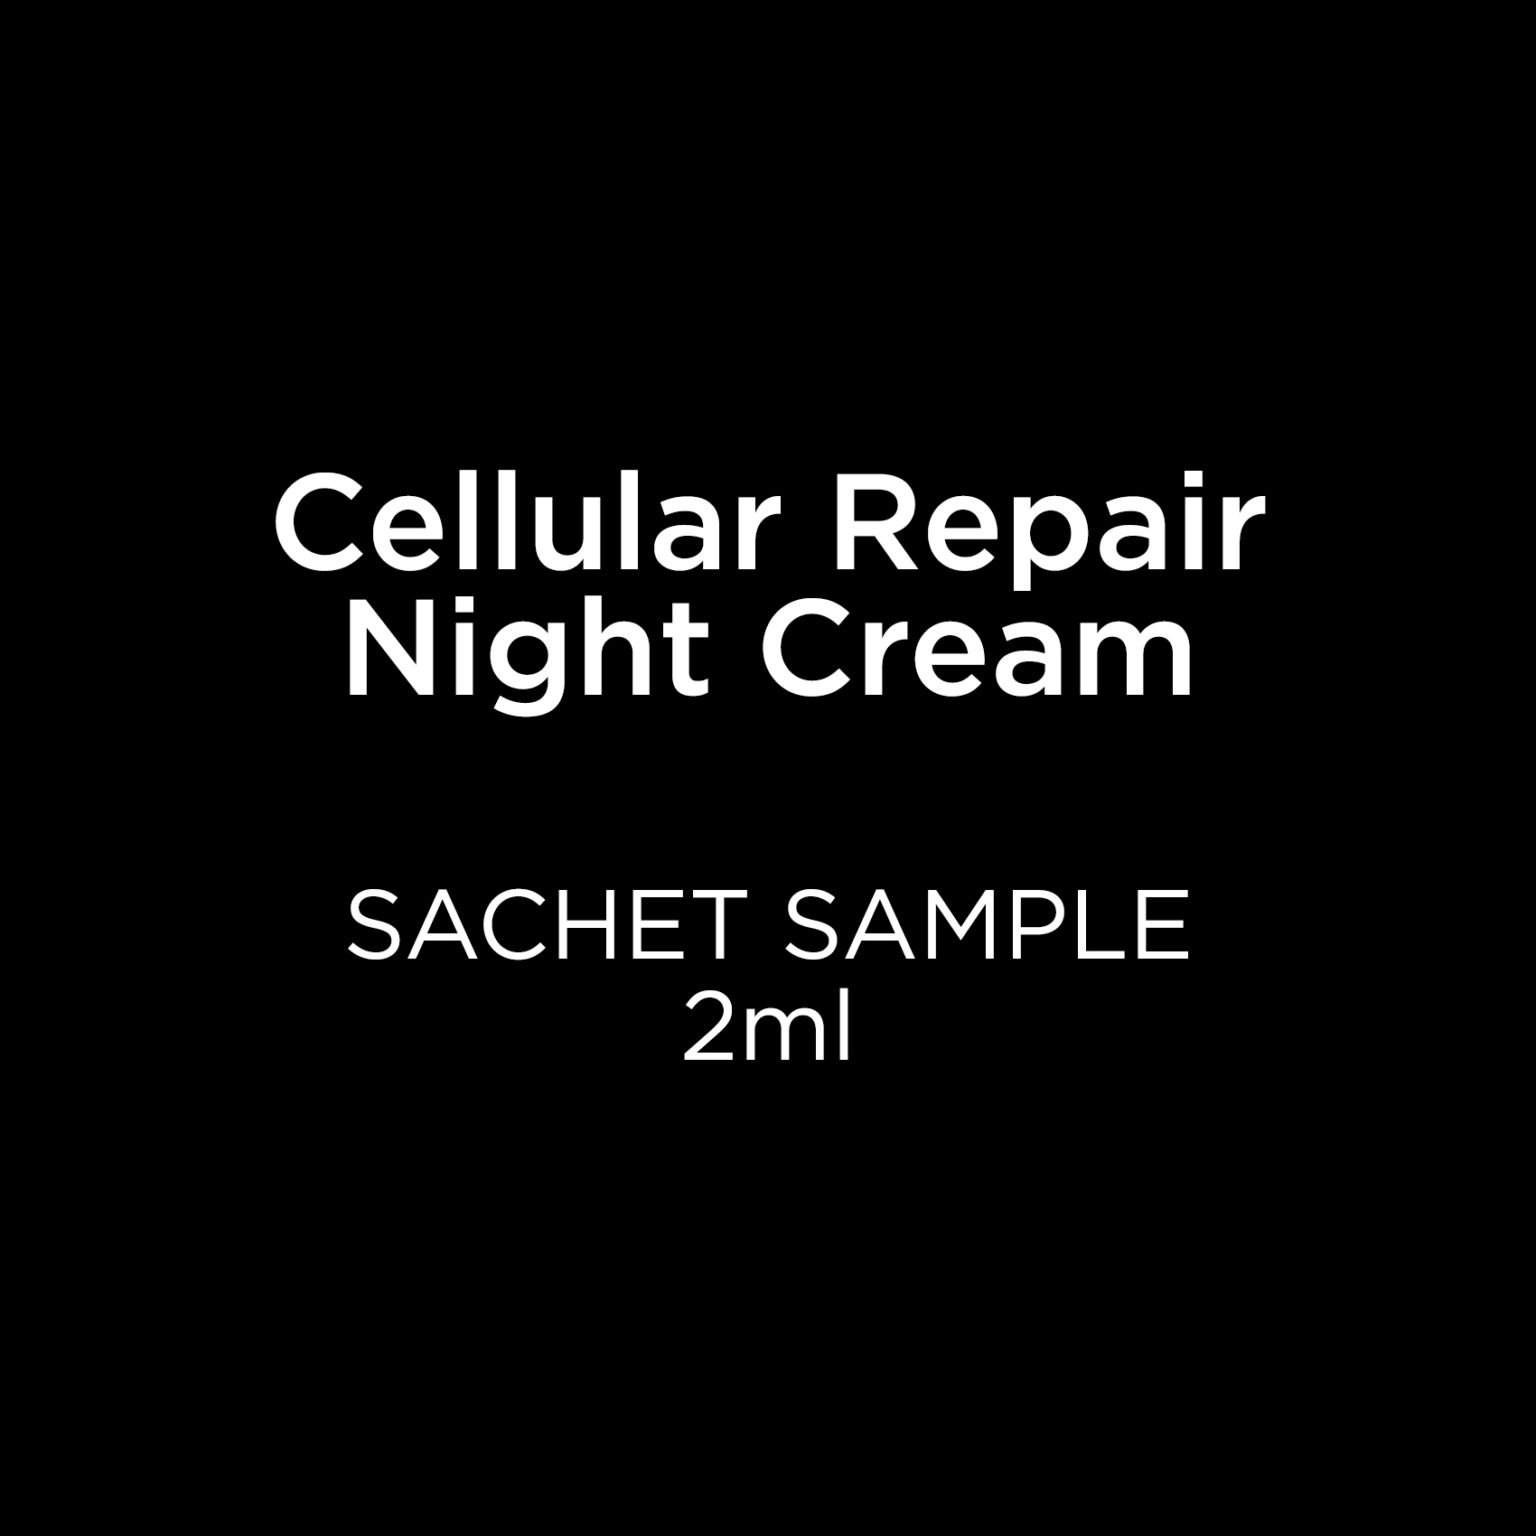 Sample Sachet Black Diamond Cellular Repair Night Cream